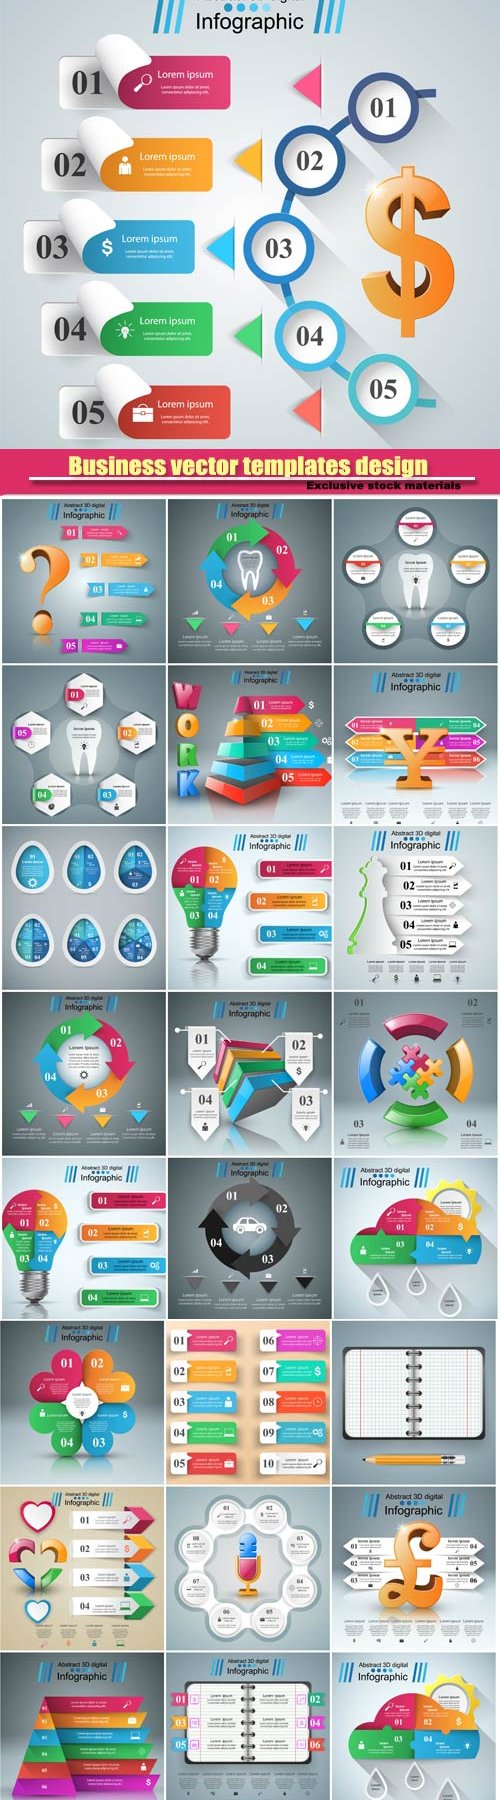 3D business infographic vector design